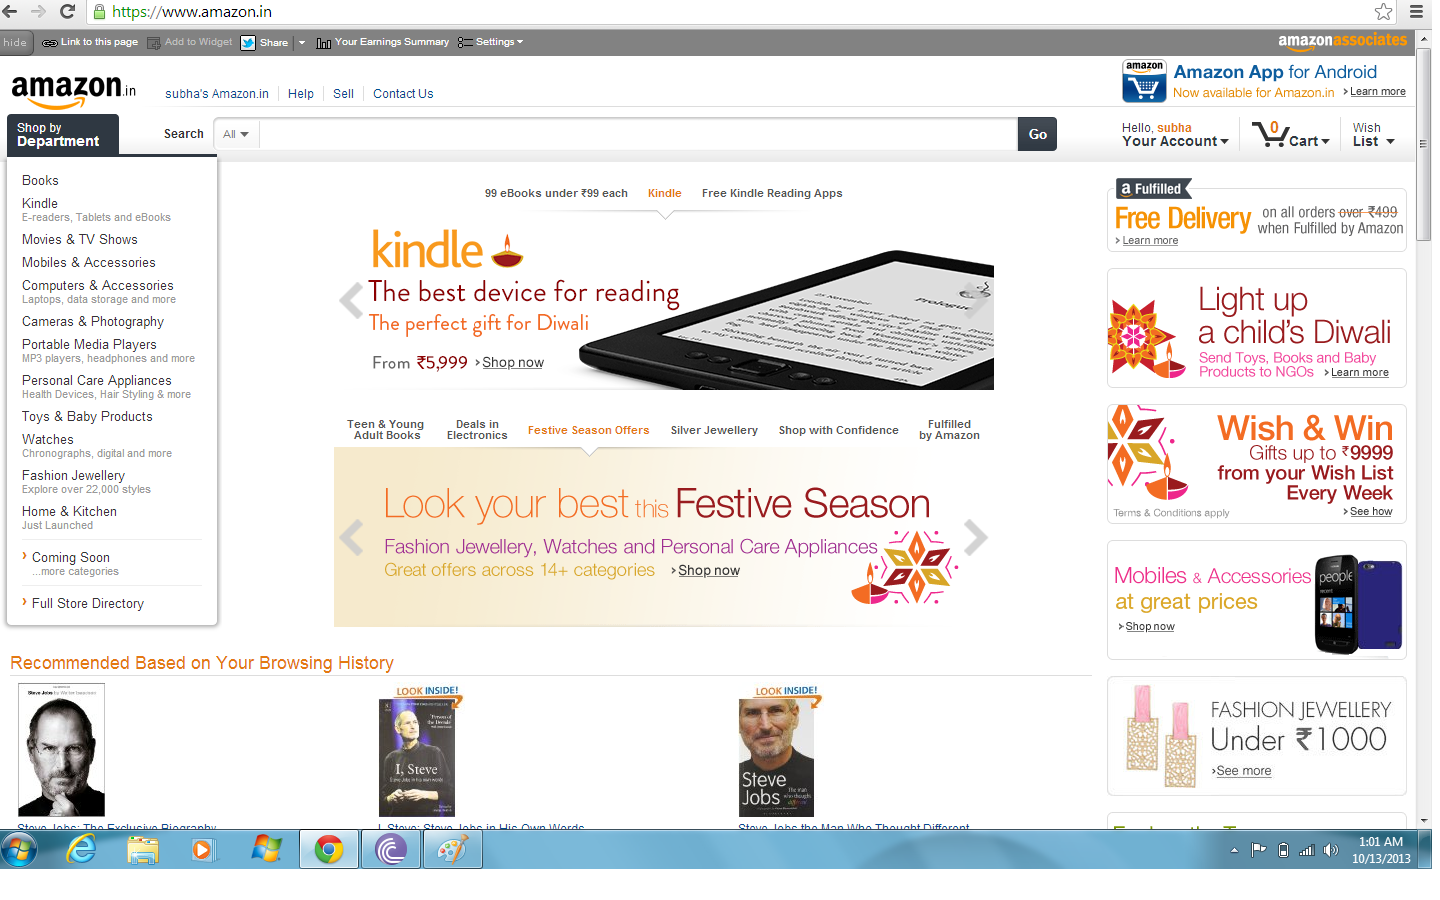 Amazon India Shopping Experience